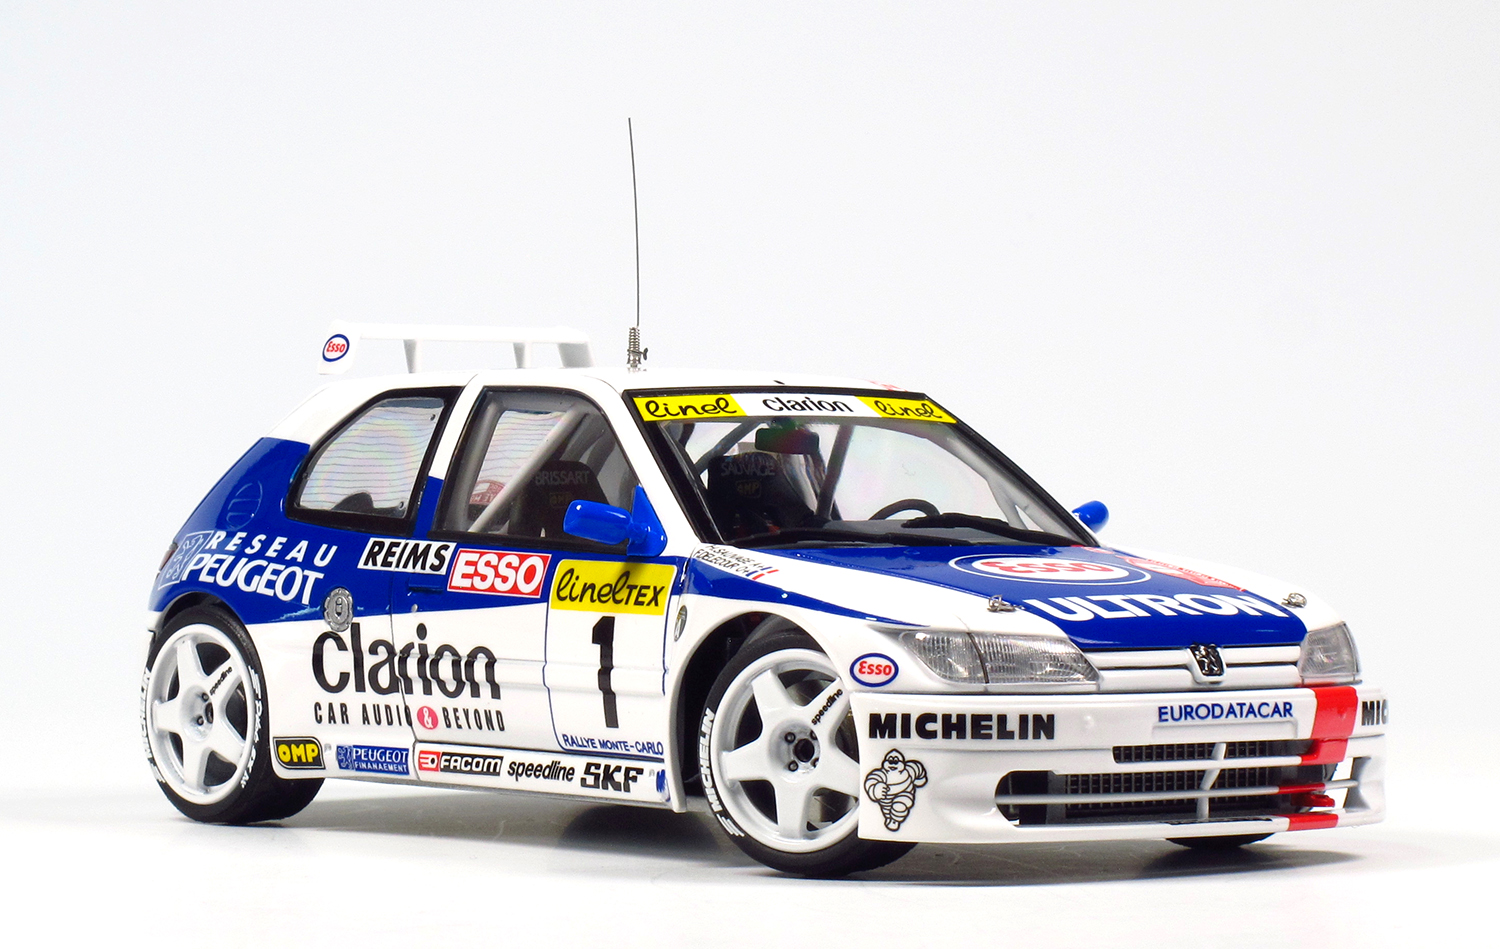 PLATZ/NUNU 1/24 PEUGEOT 306 MAXI 1996 Monte Carlo Rally Set